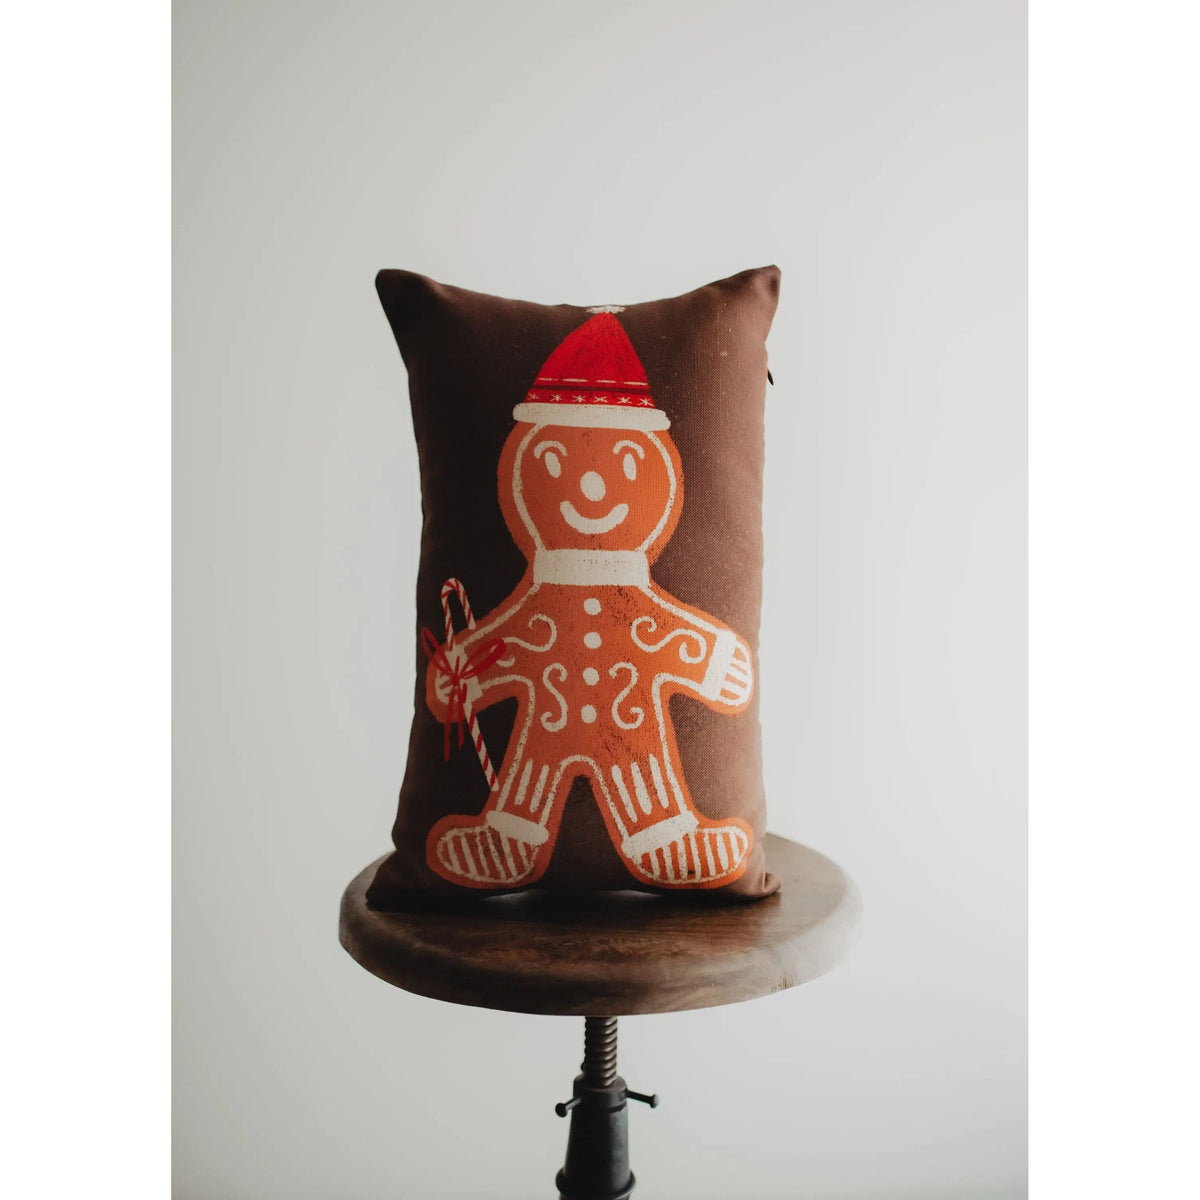 Iced Gingerbread Man Christmas Throw Pillow | Pillow Cover